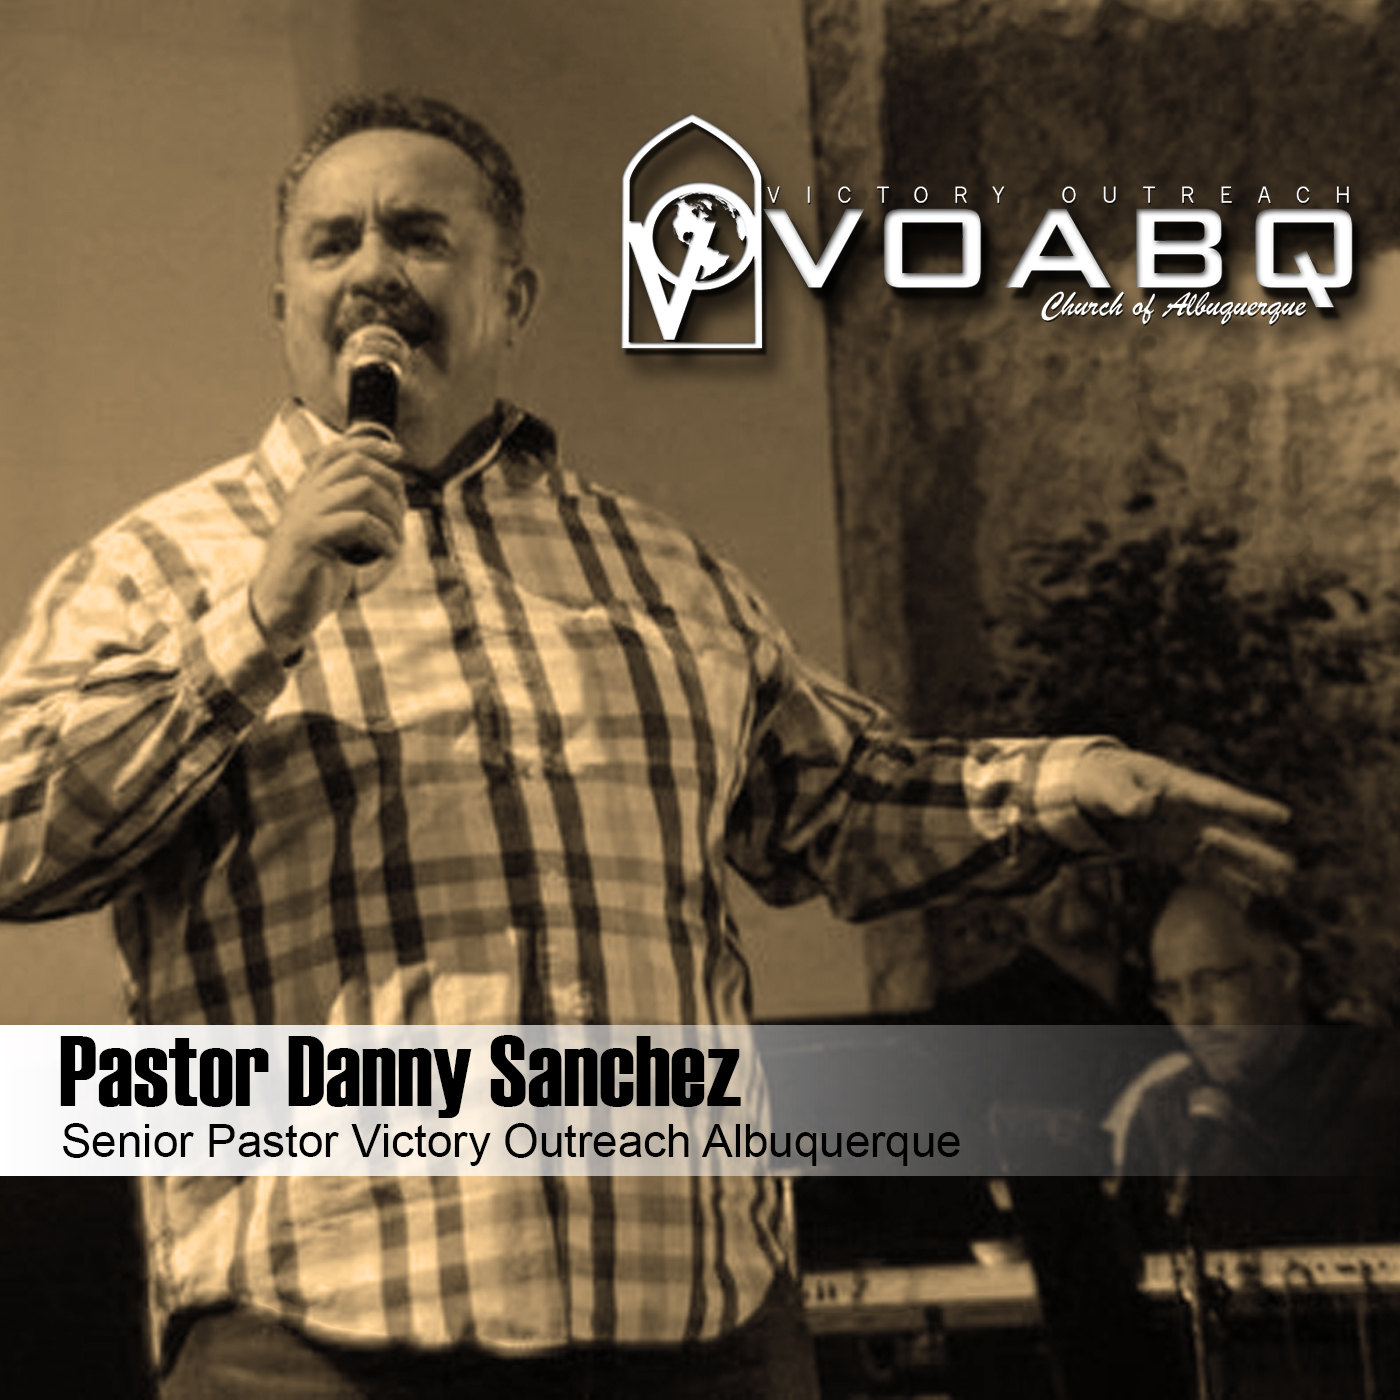 5.4.14 Pastor Danny Sanchez - Forced to Climb a Tree